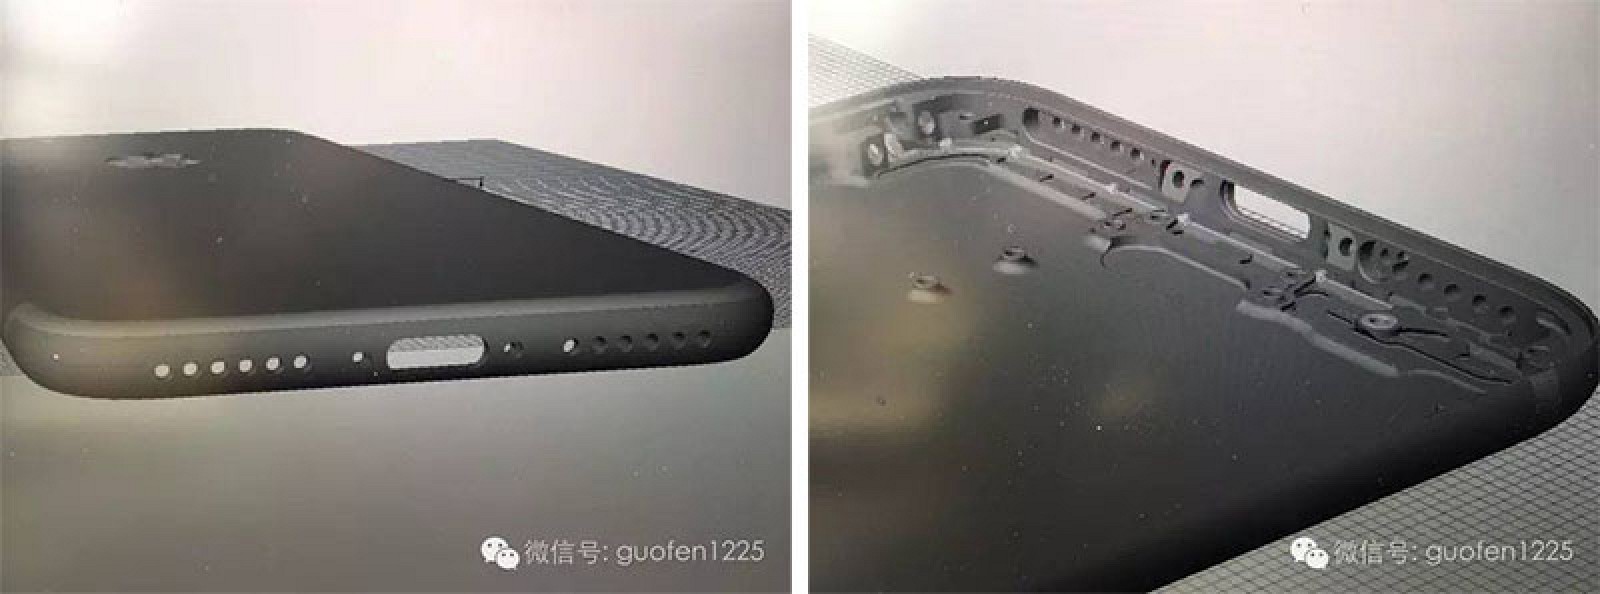 iPhone-7-speaker-grille-closed-off.jpg